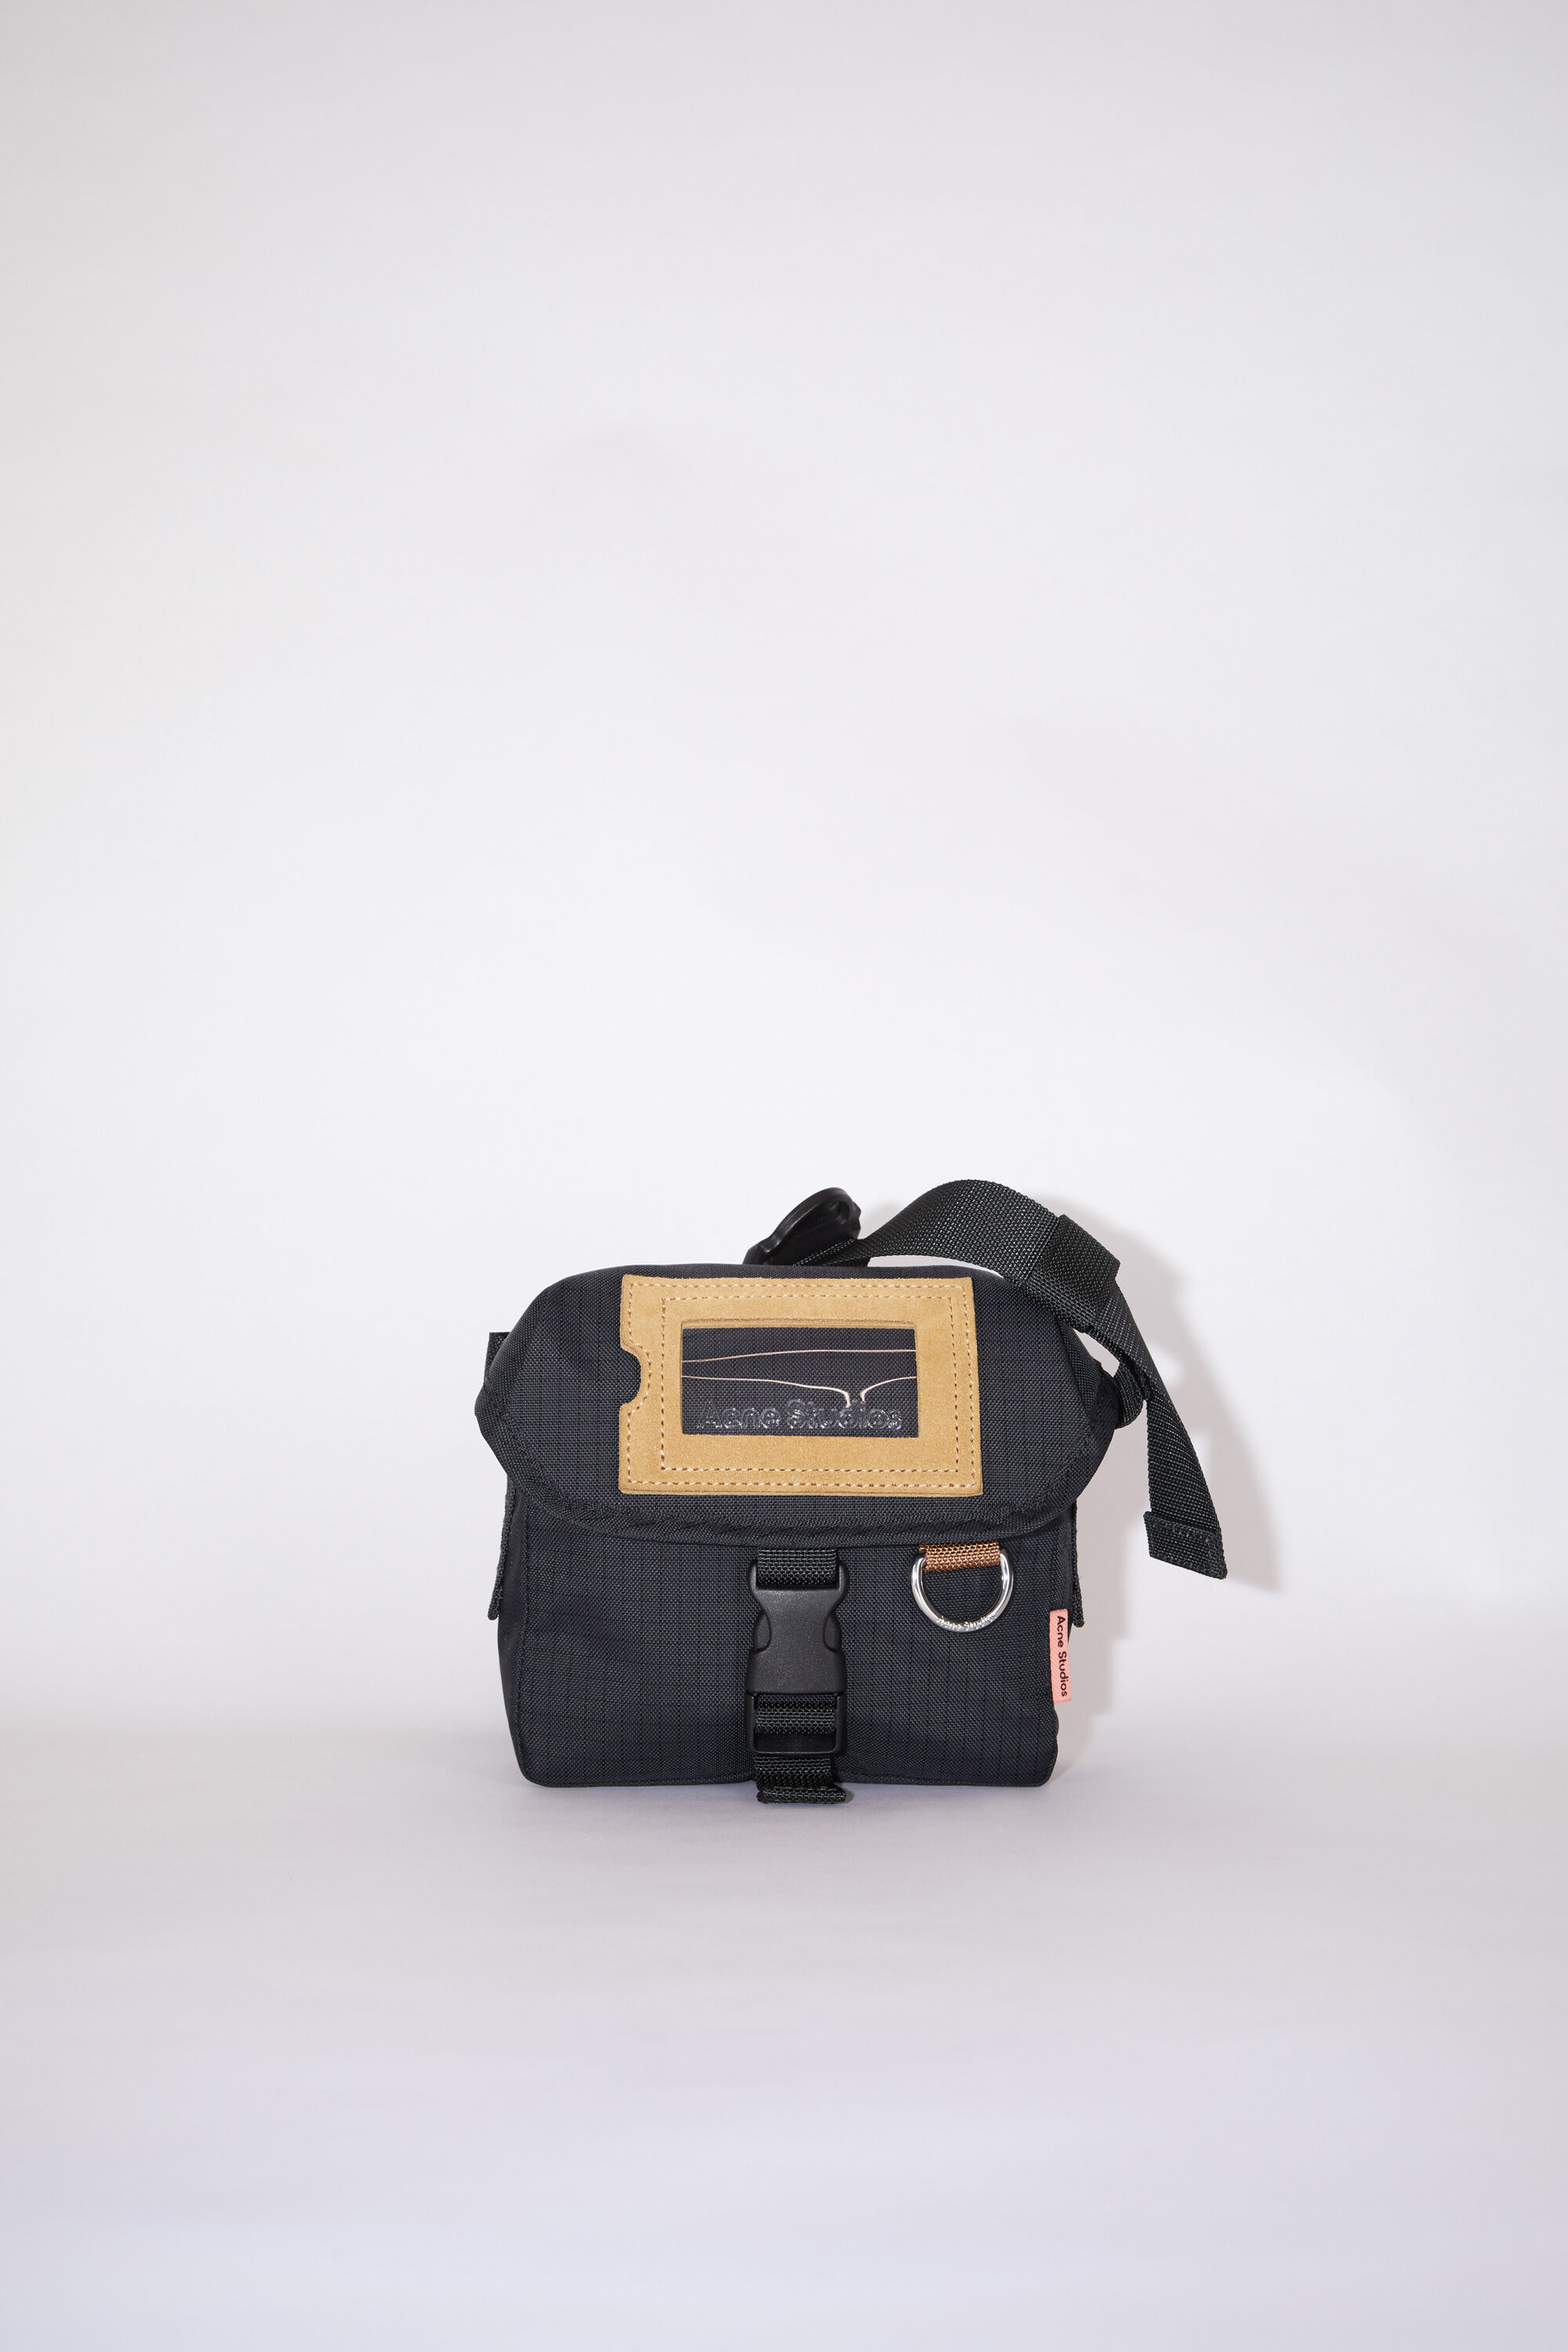 Acne Studios - Mini messenger bag - Black